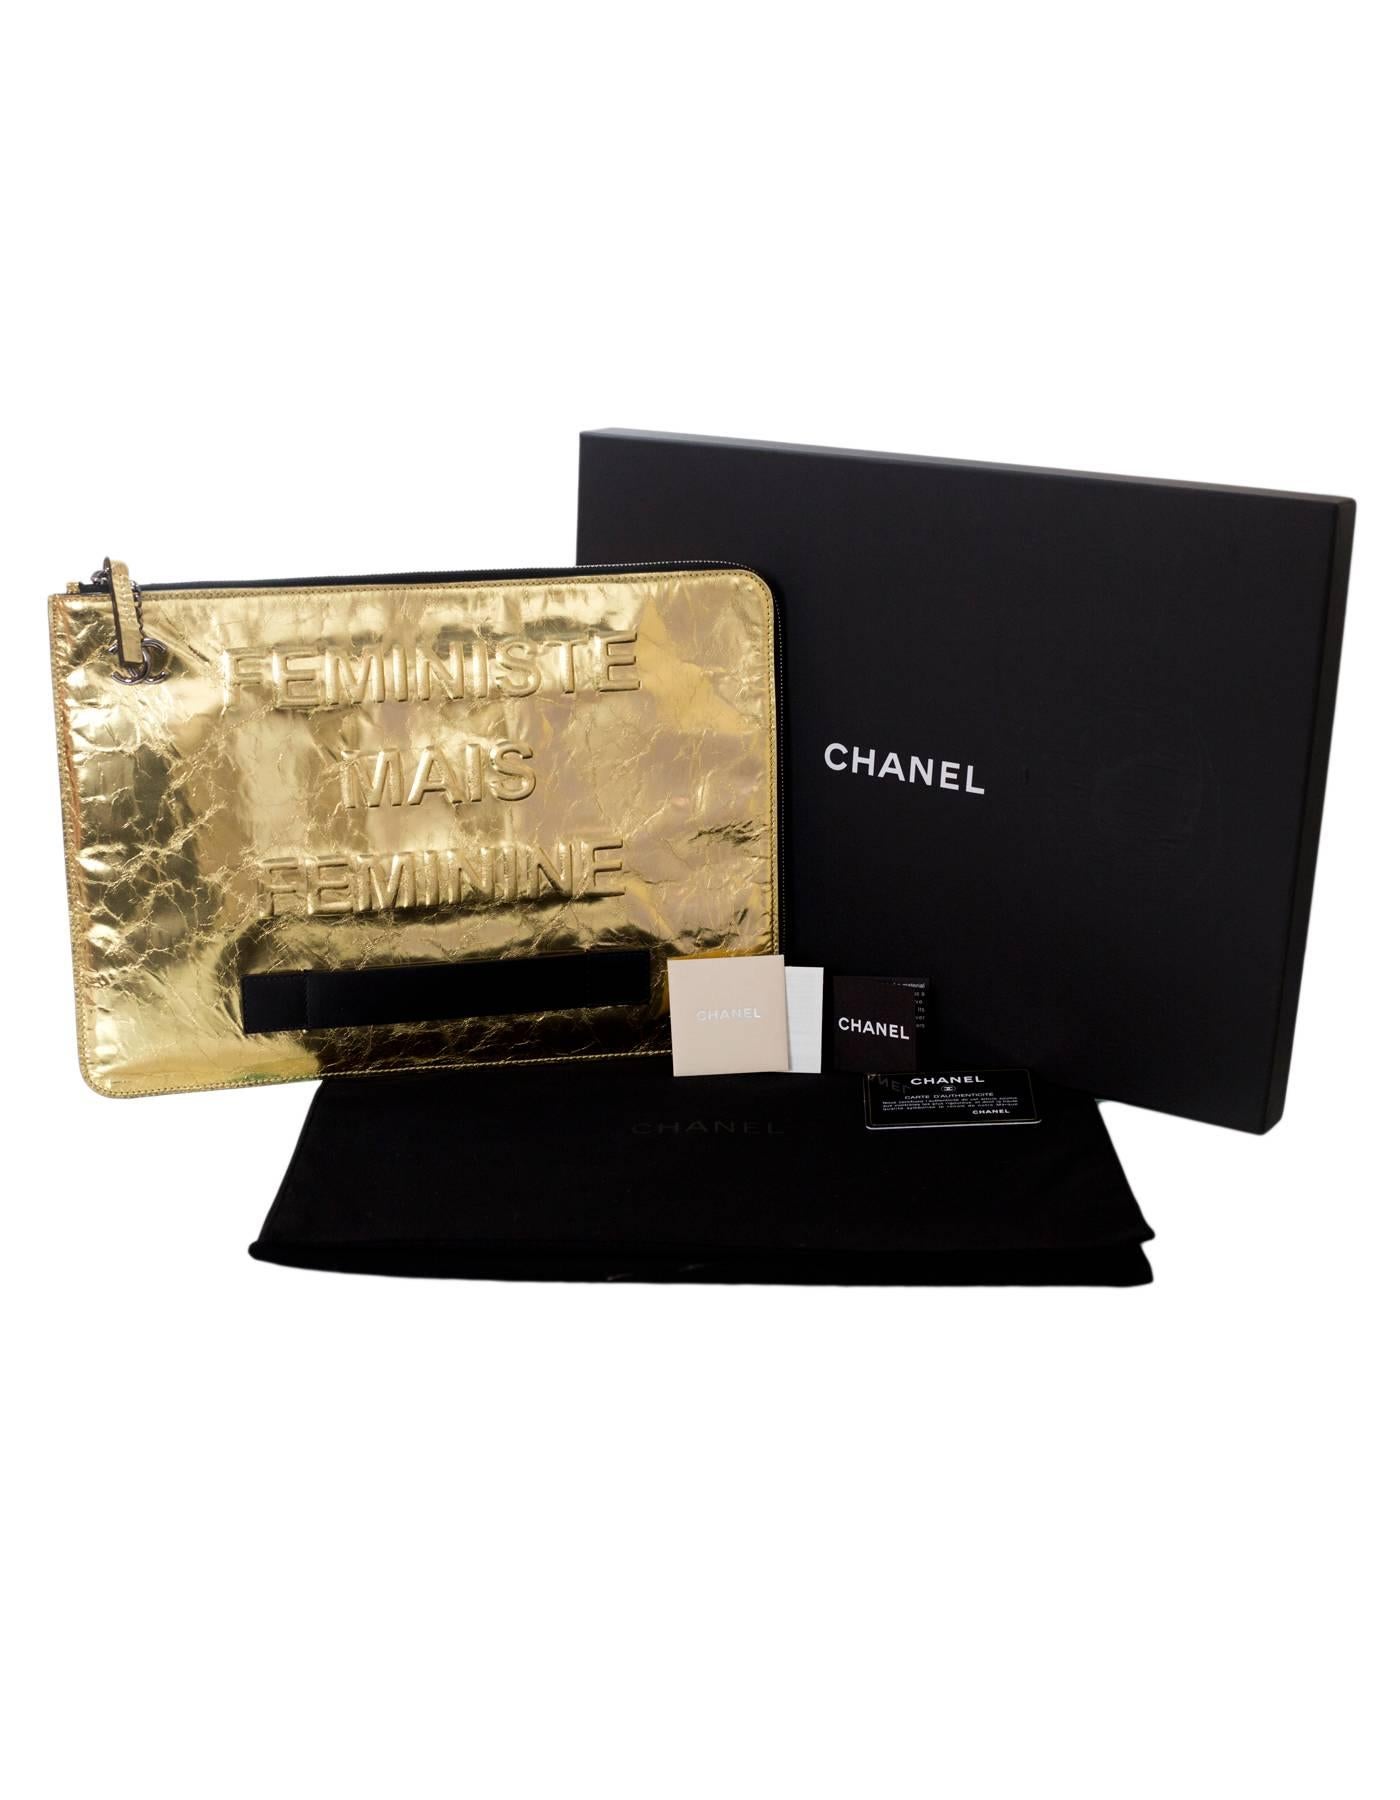 Chanel 2015 Gold Crinkled Leather Large Feminist Mais Feminine Clutch Bag 5